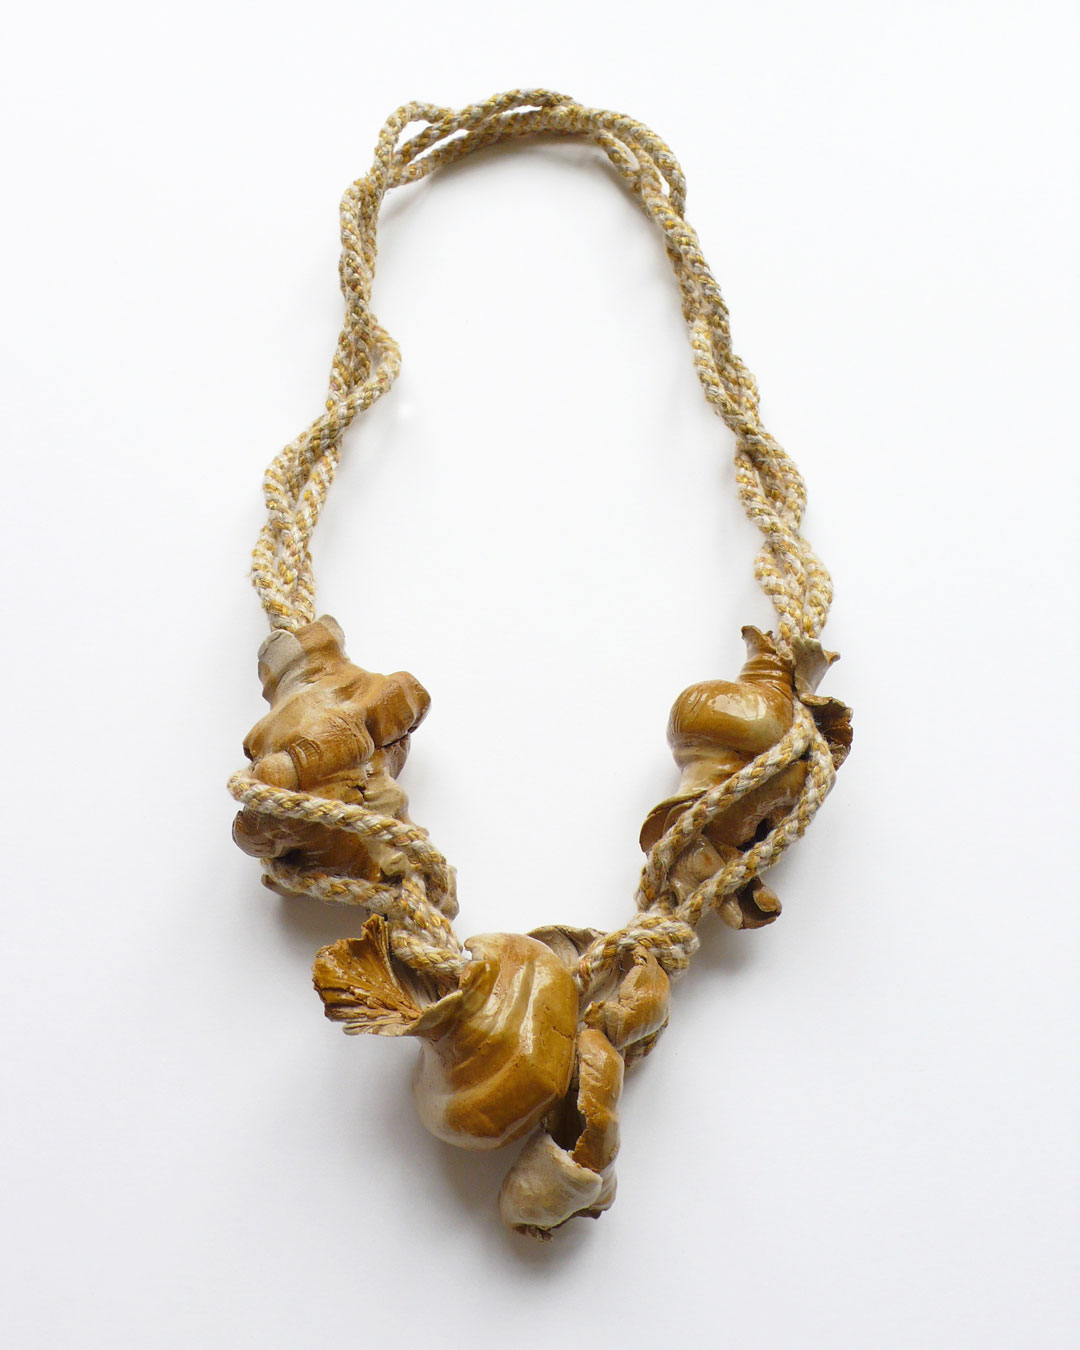 Ineke Heerkens, Vingerschelpen (Finger Shells), 2019, necklace; ceramic/stoneware, cord; linen, silk, lurex, 310 x 170 x 45 mm, €1920